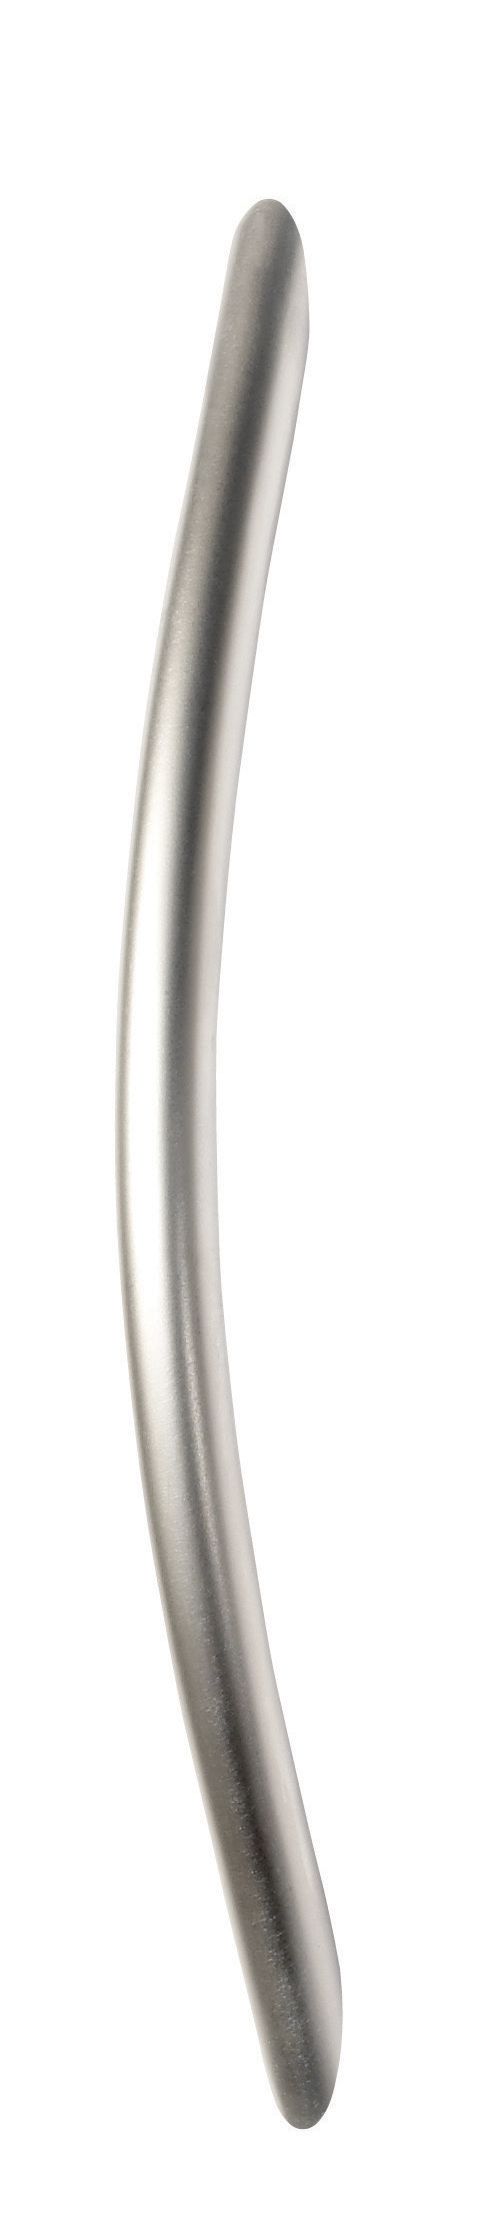 Image of Wickes Satin Nickel Arch Handle - 160mm